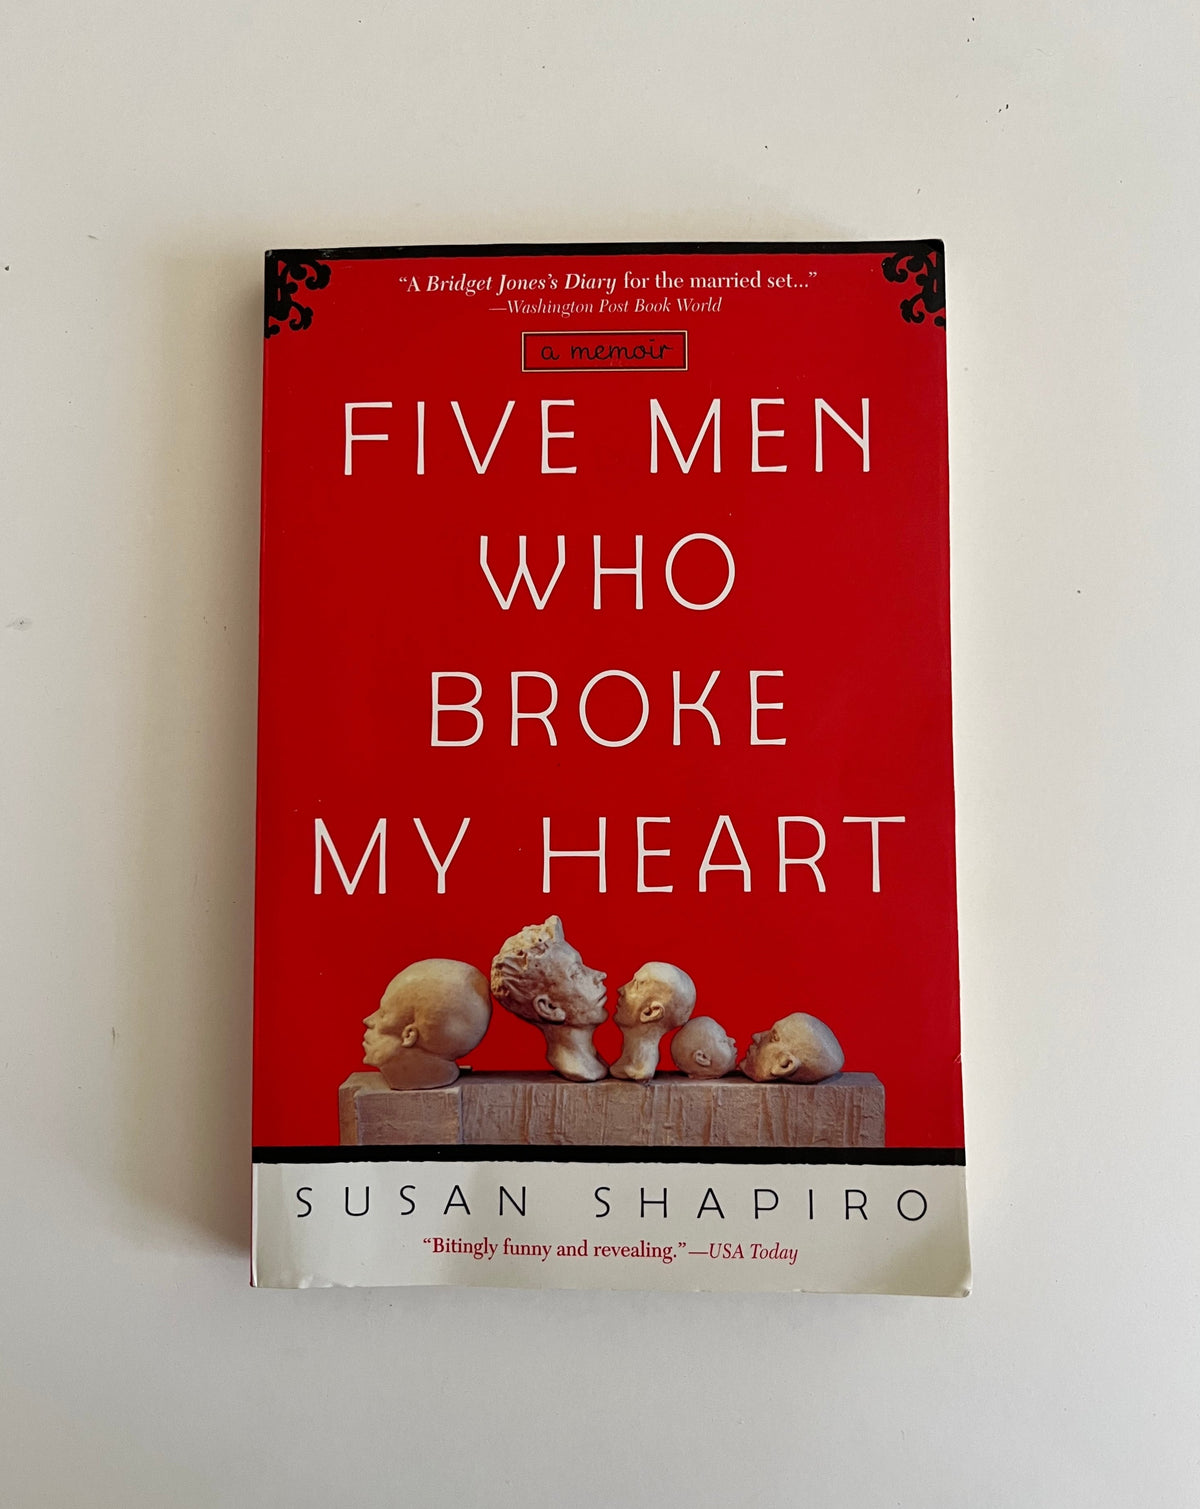 Five Men Who Broke My Heart by Susan Shapiro